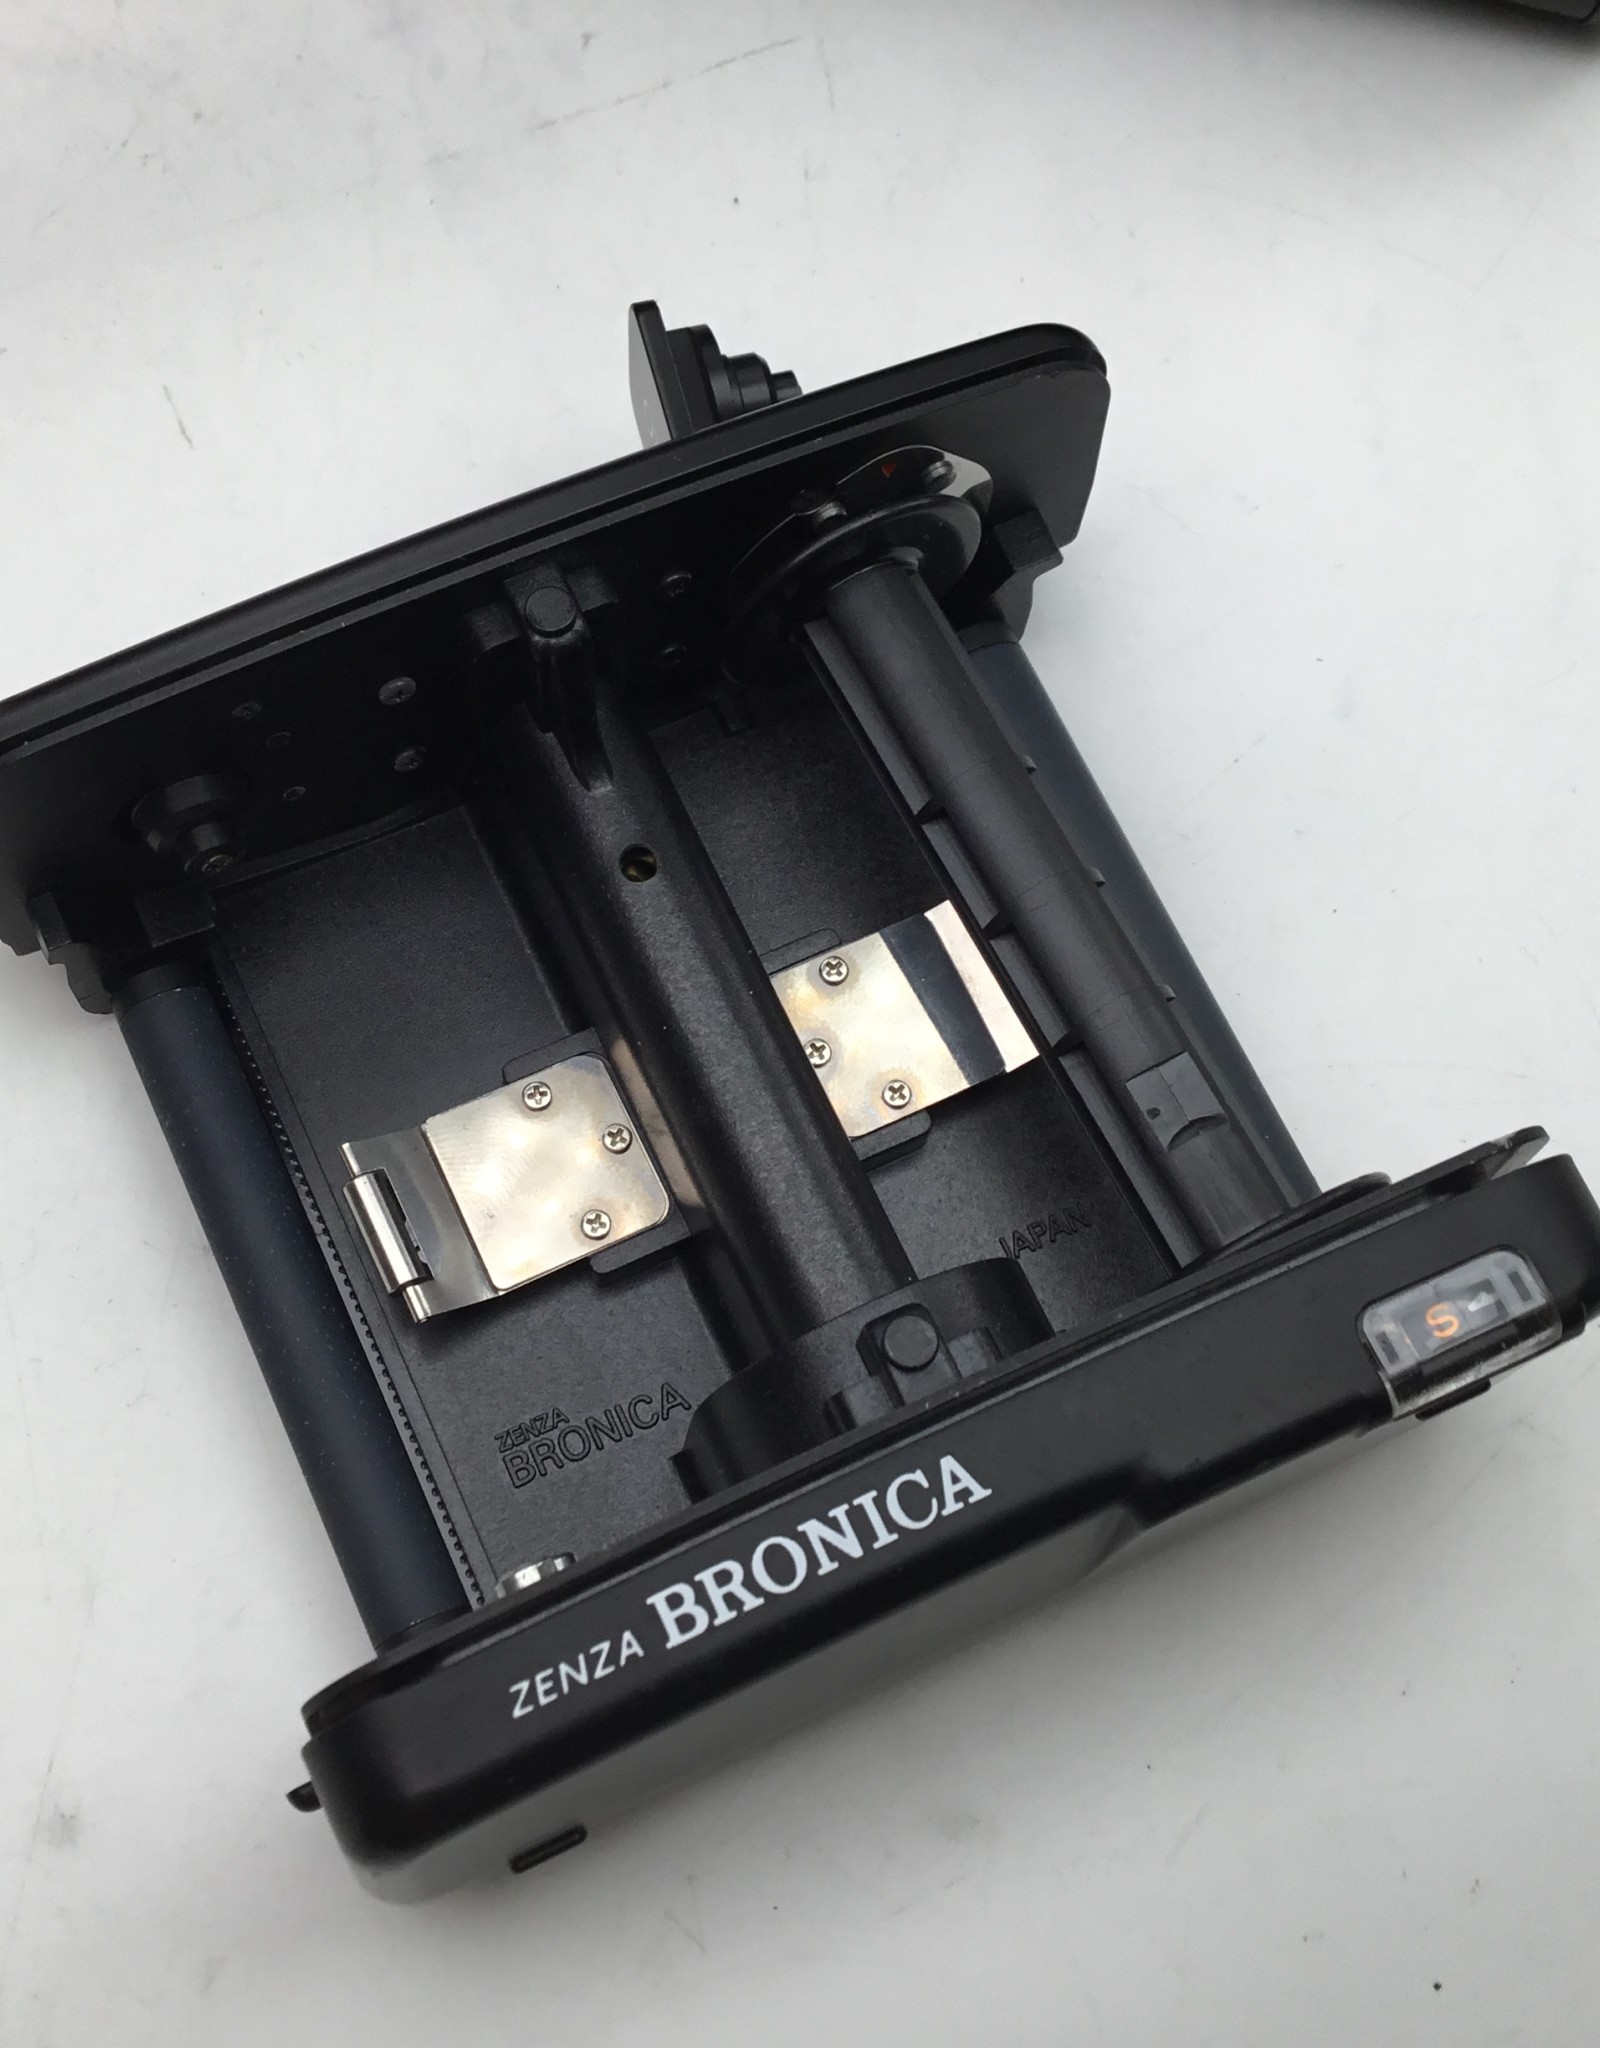 Bronica Bronica GS-1 Film Insert 220 in Box Used EX